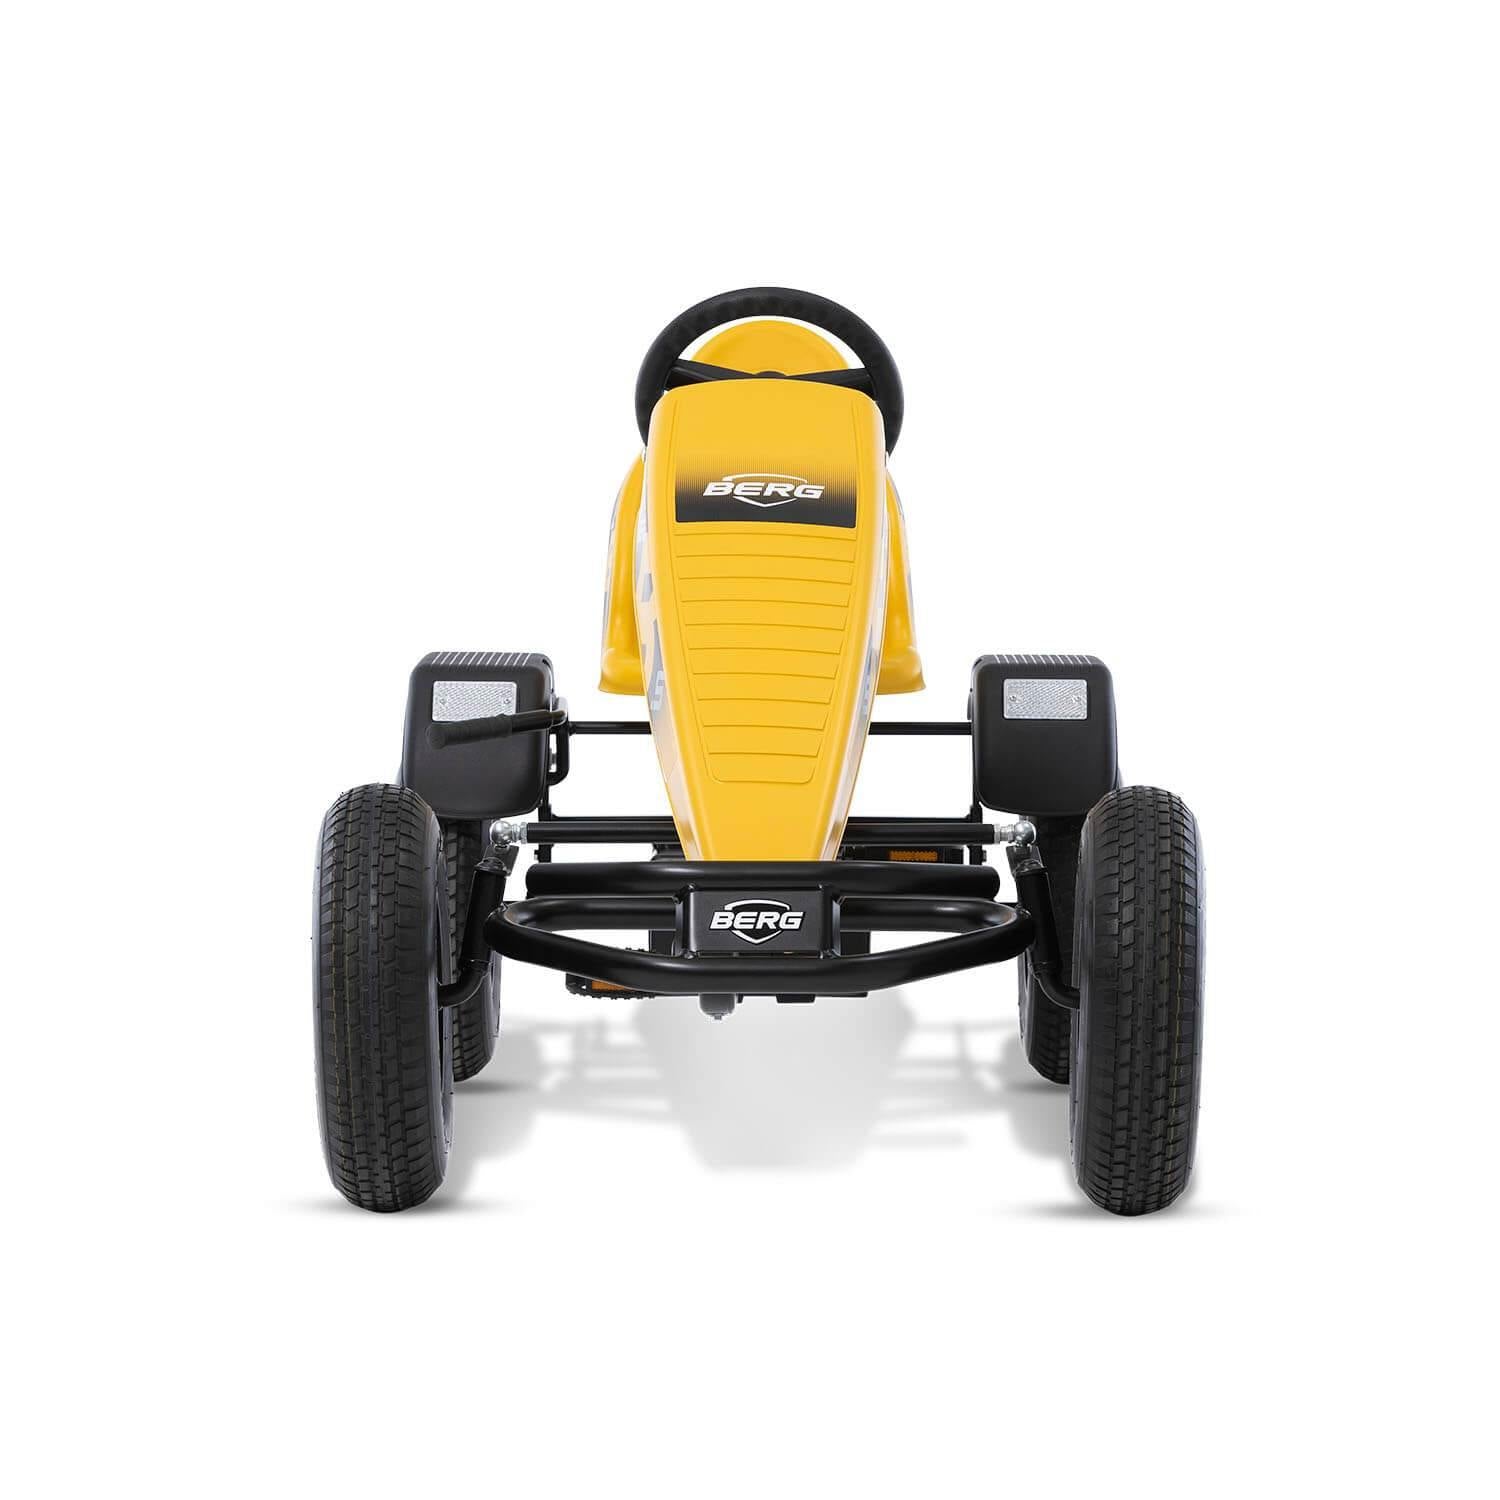 BERG B.Super Pedal Kart  River City Play Systems